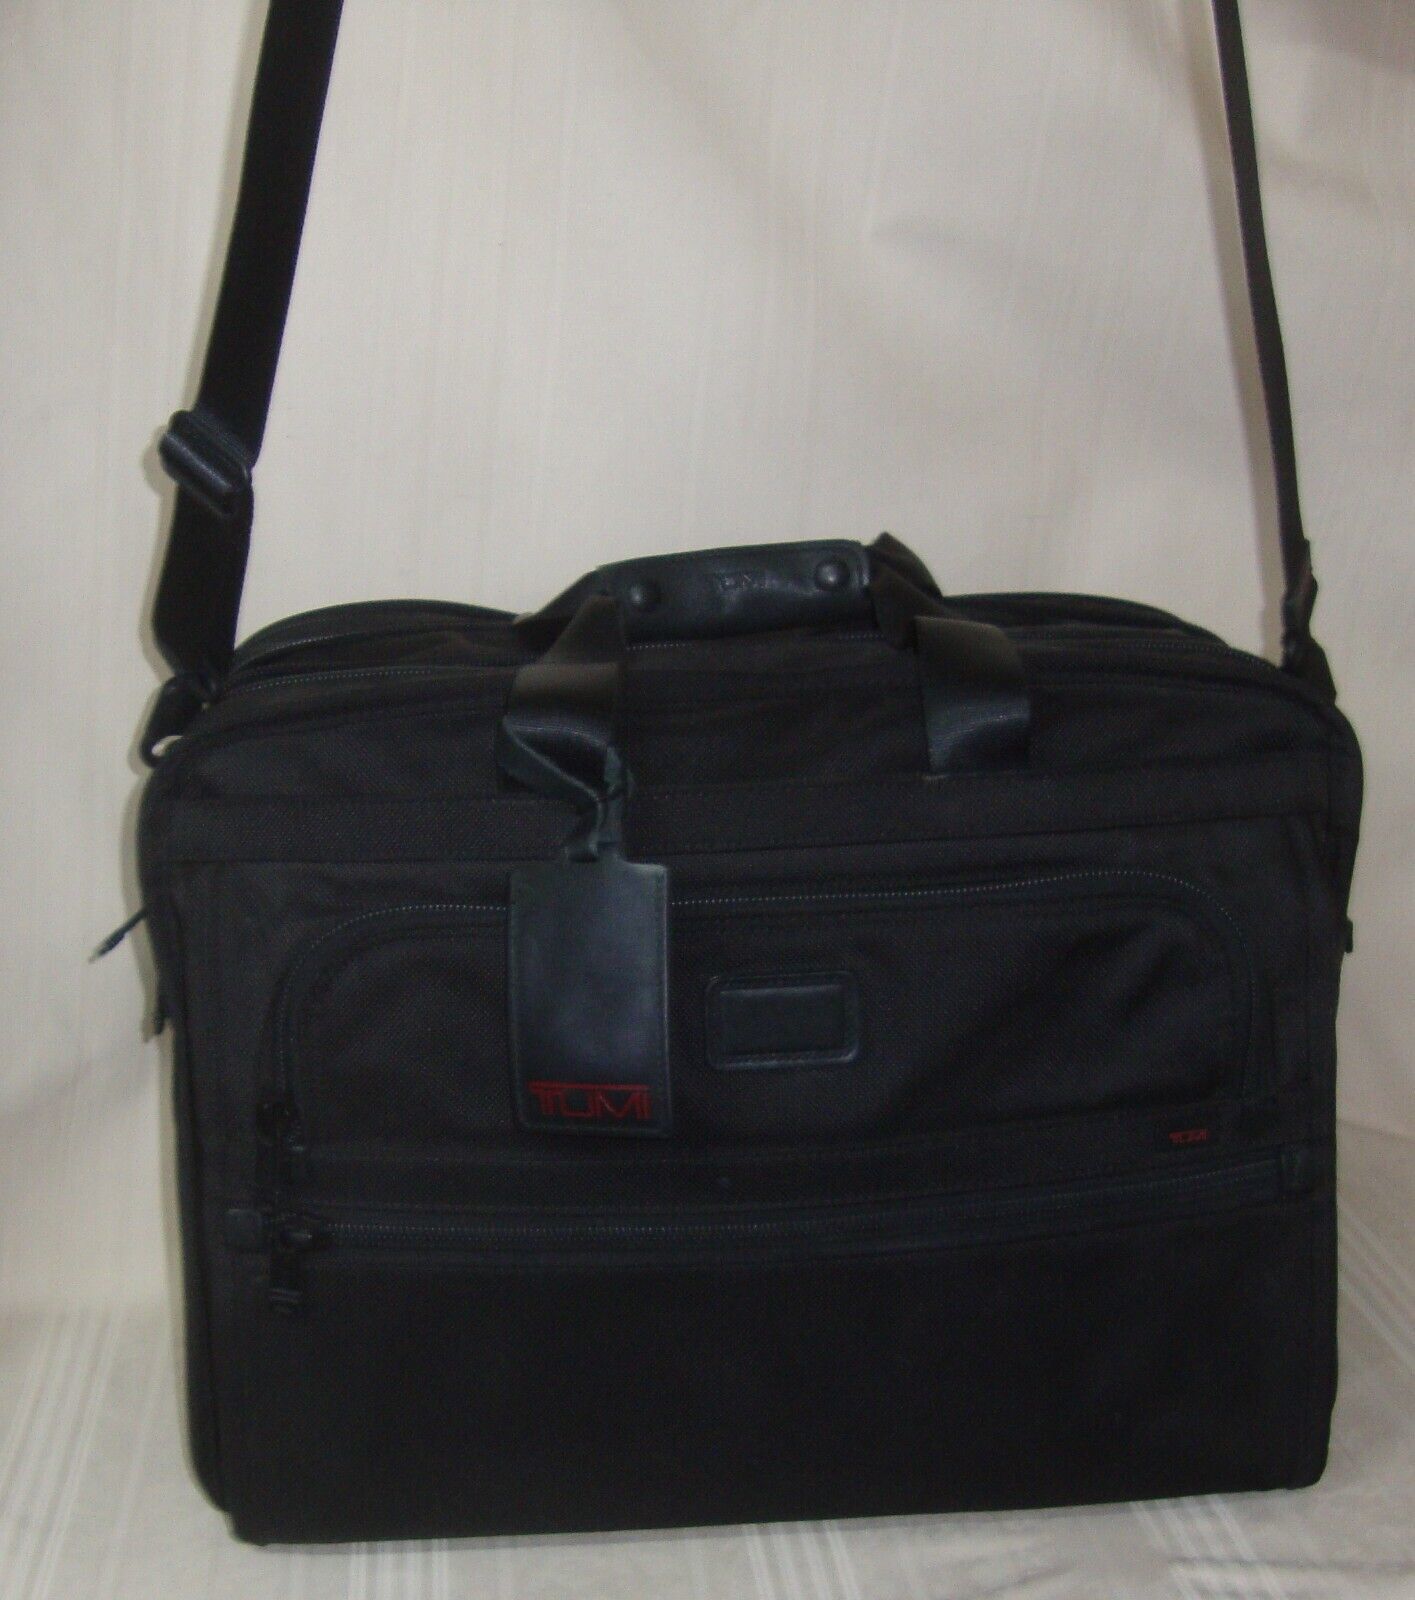 Tumi Black Nylon Carry On Expandable Luggage Laptop Shoulder Bag 22121DH - $158.39